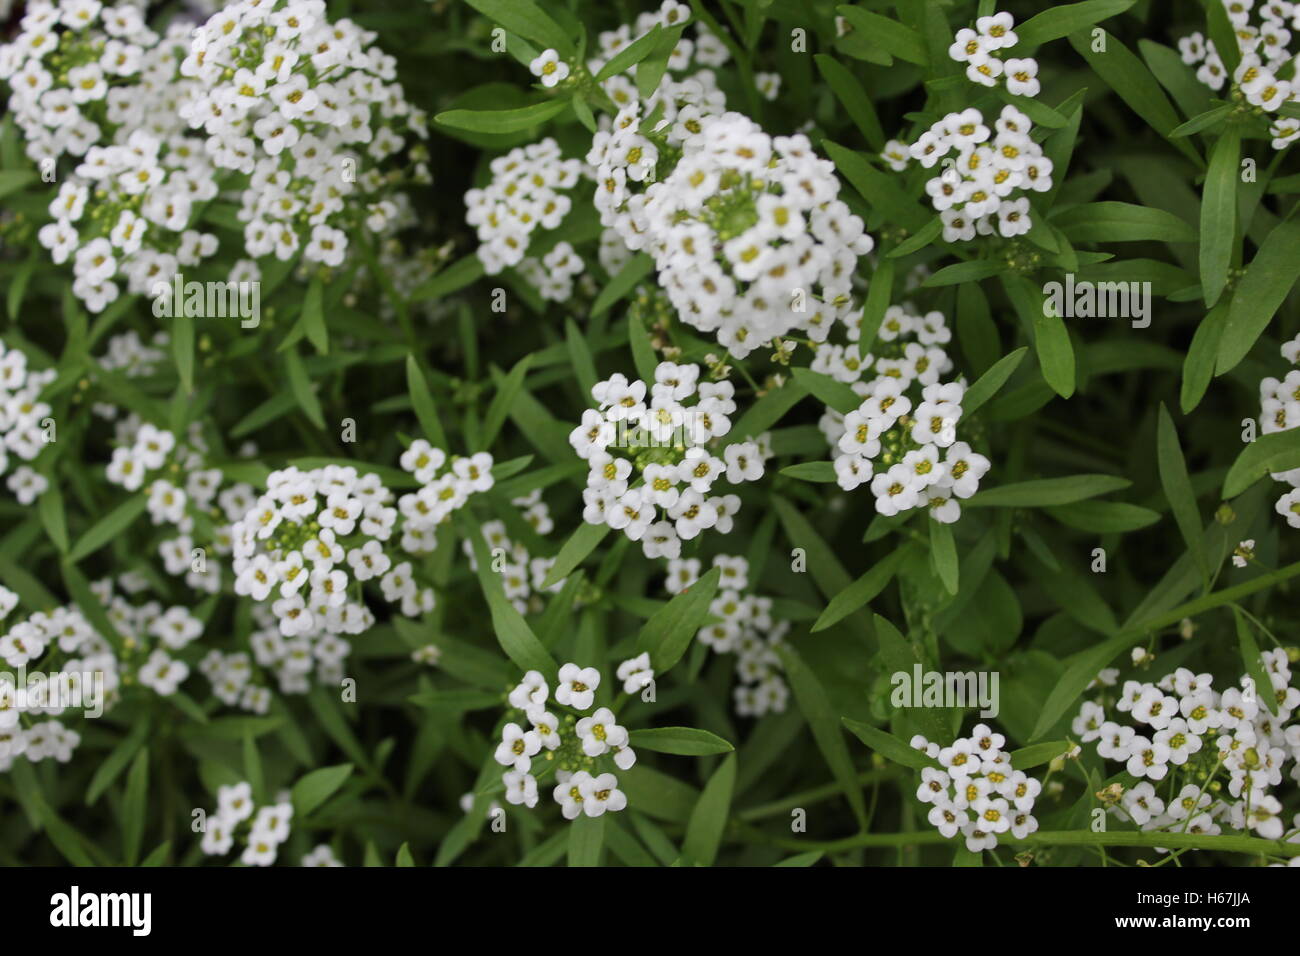 Background of white flowers alissum 20403 Stock Photo